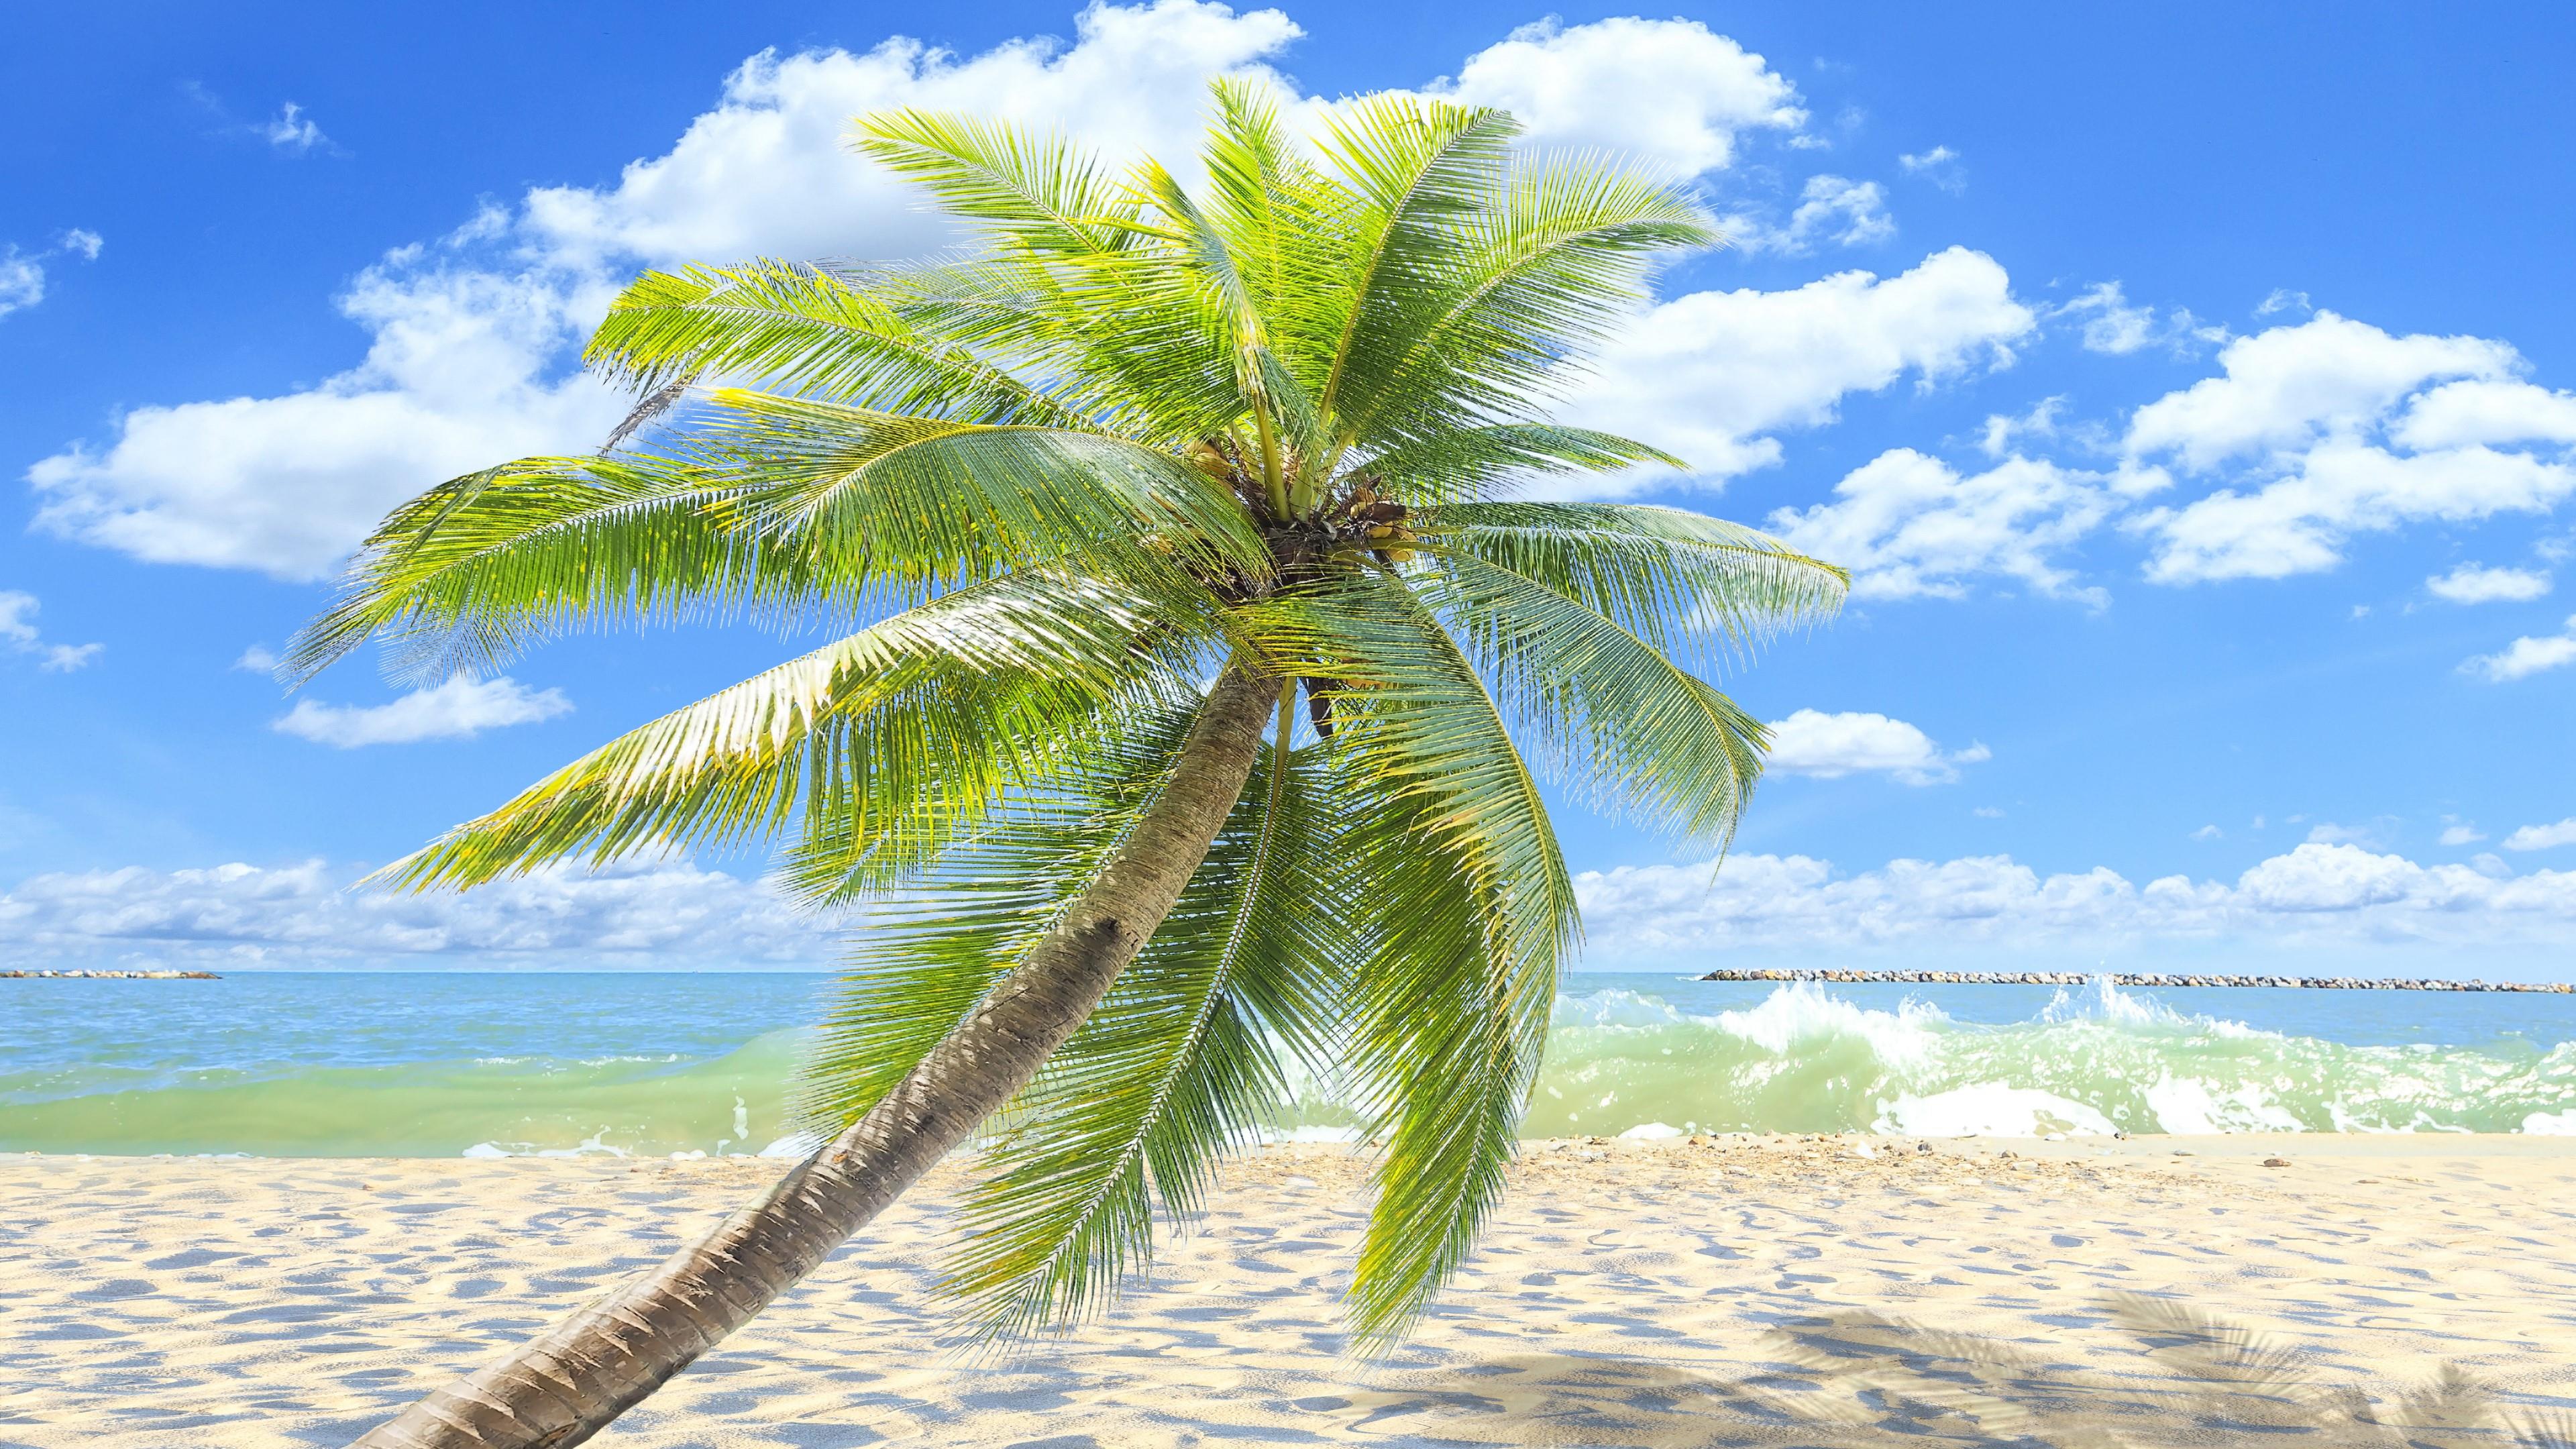 Single Palm Tree On The Sandy Beach 4K UltraHD Wallpaper. Wallpaper